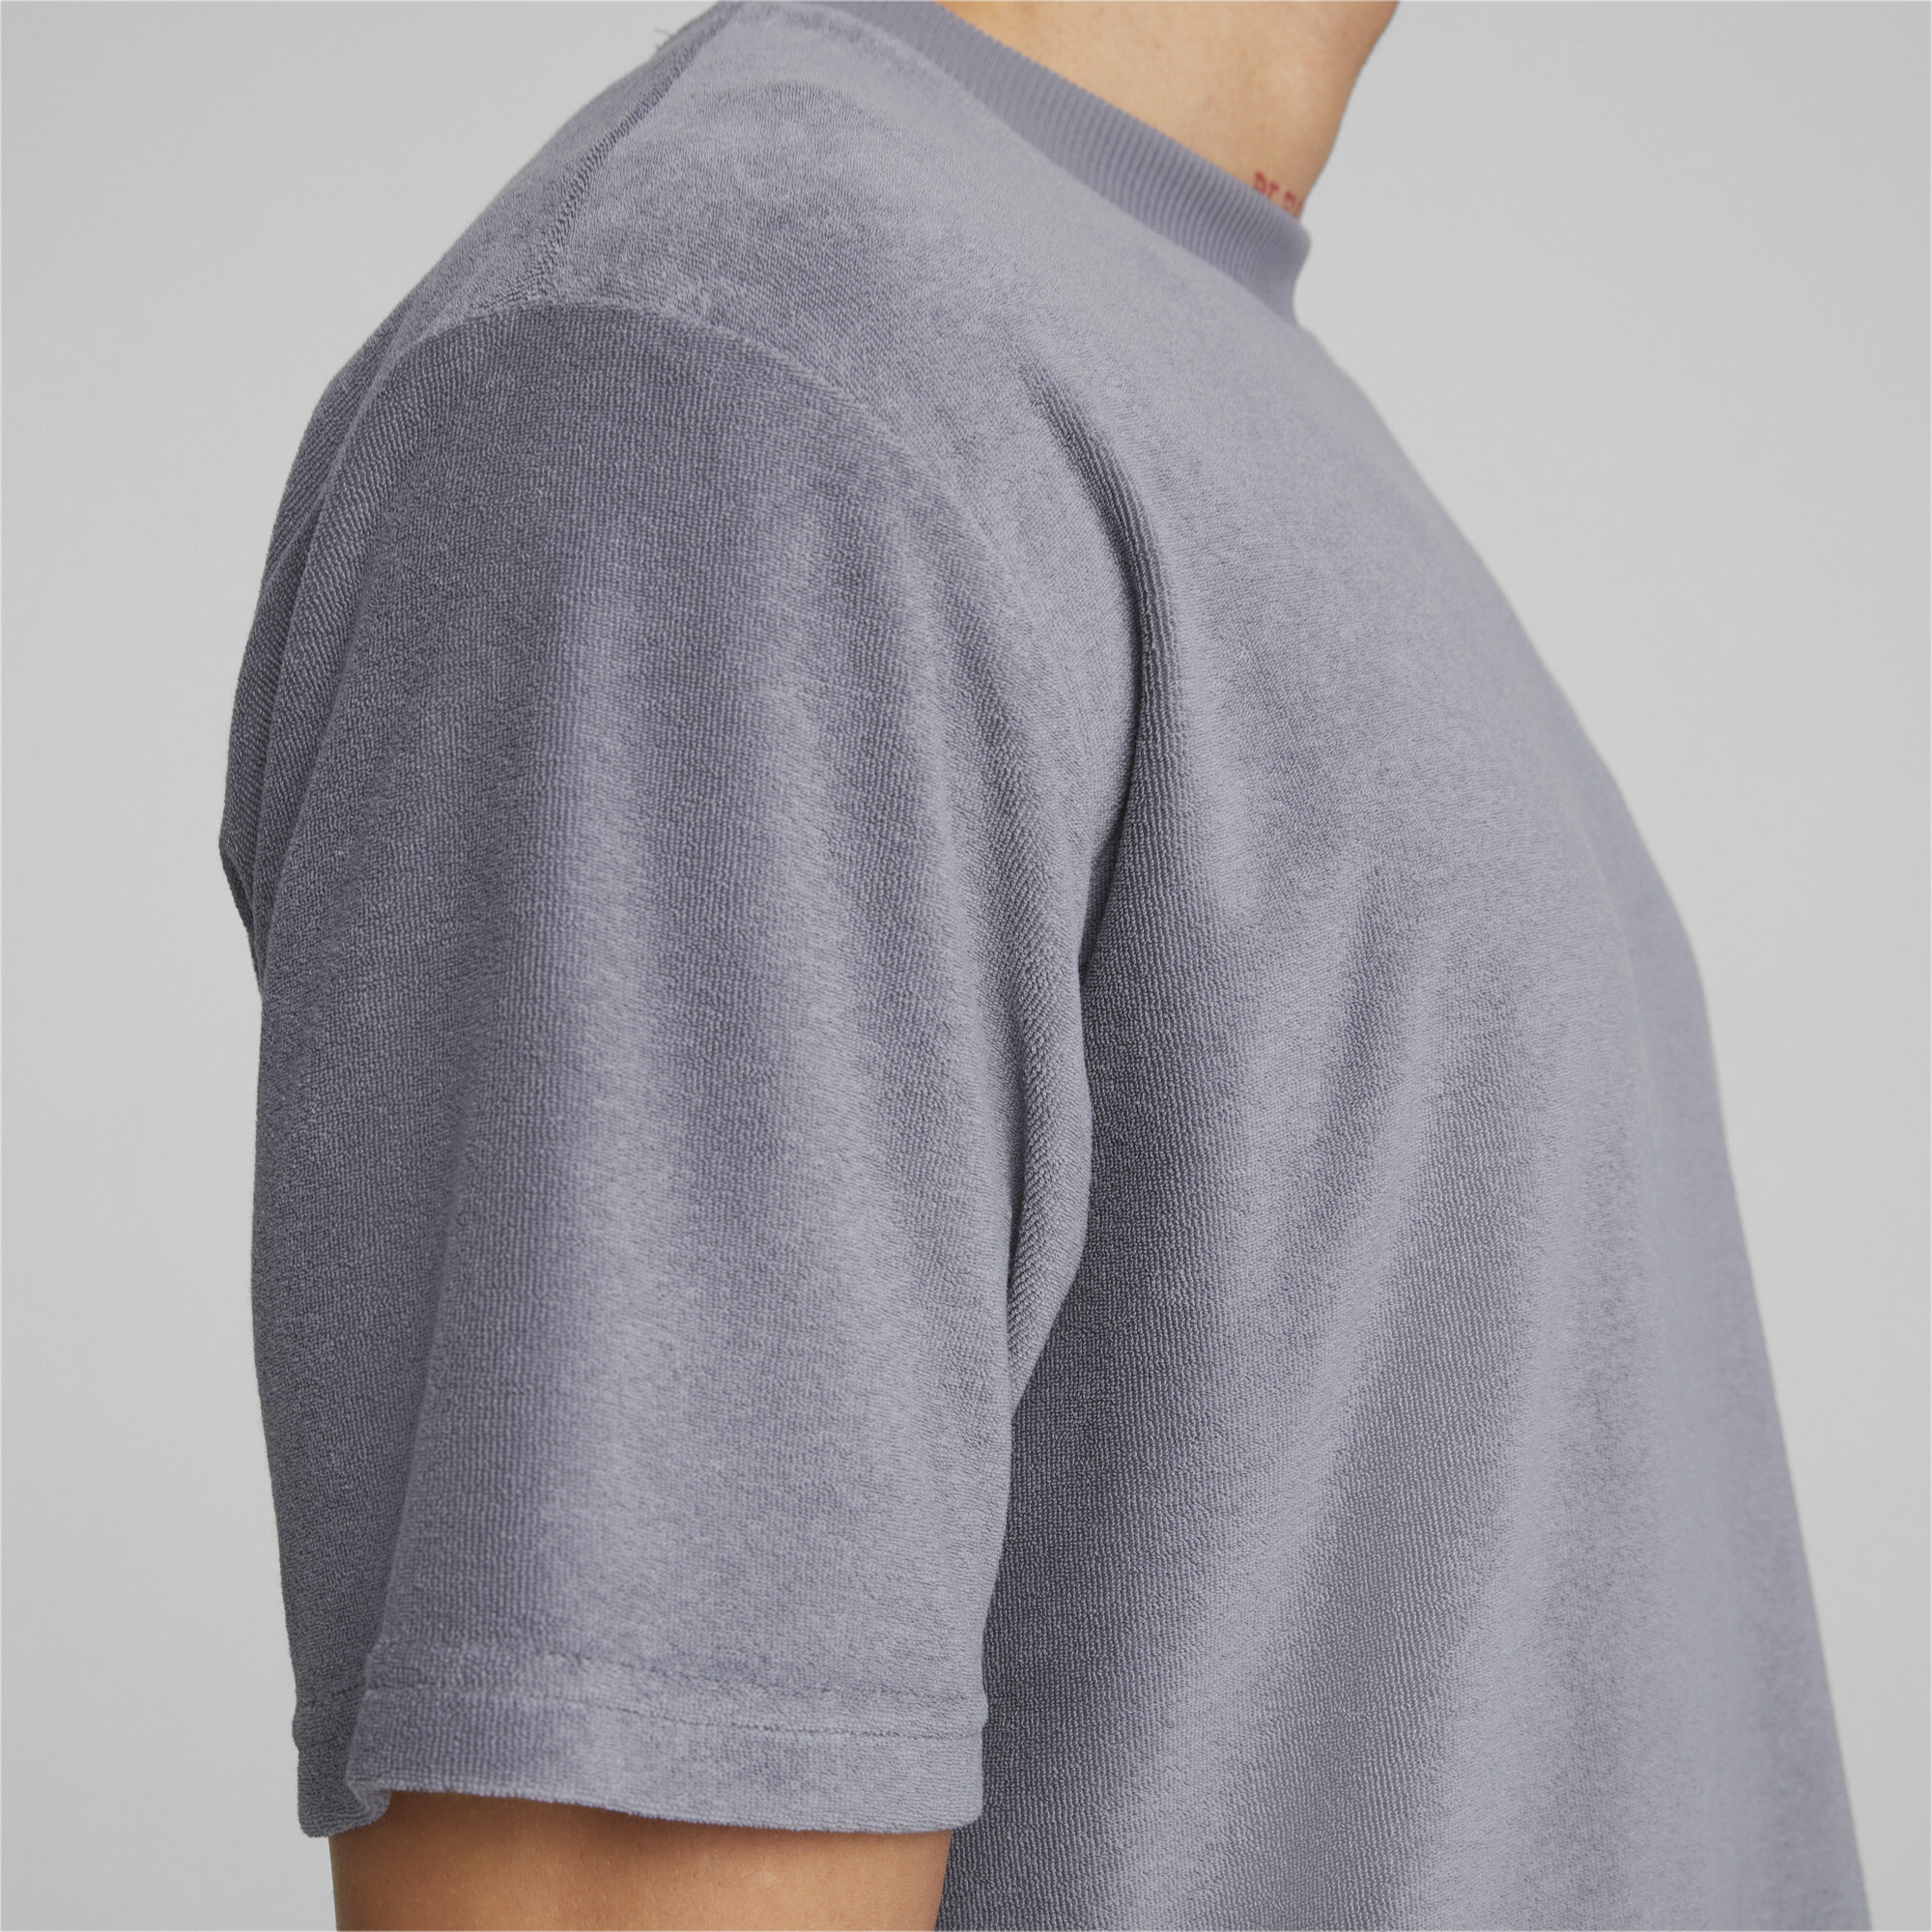 Men's Puma Classics Towelling T-Shirt, Gray, Size XL, Clothing